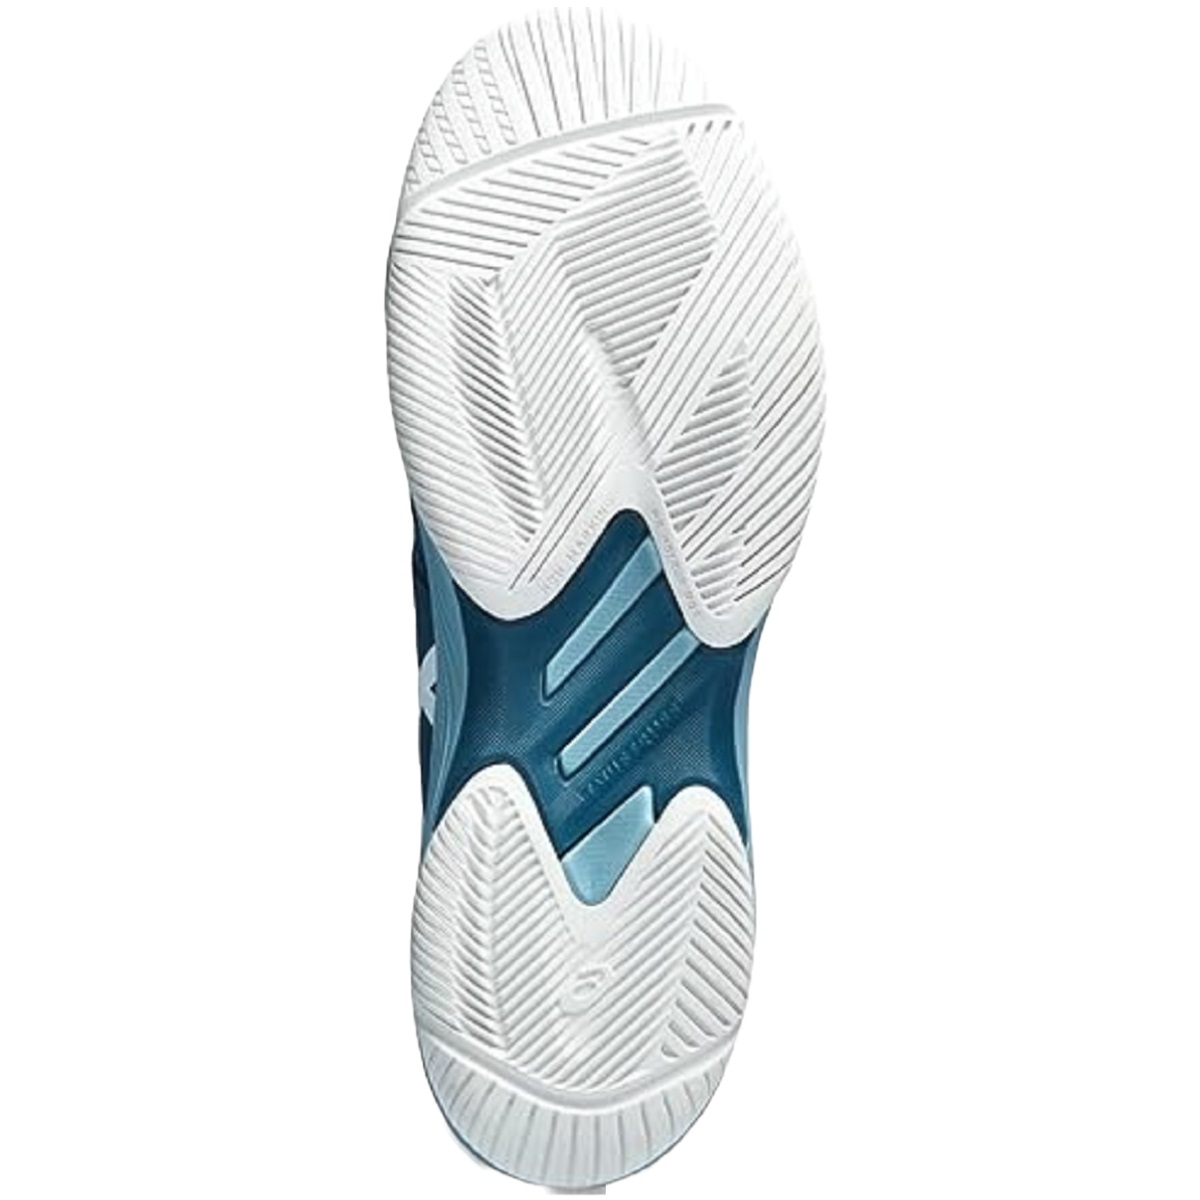 Asics Men's Solution Swift FF Tennis Shoes (Restful Teal/White)